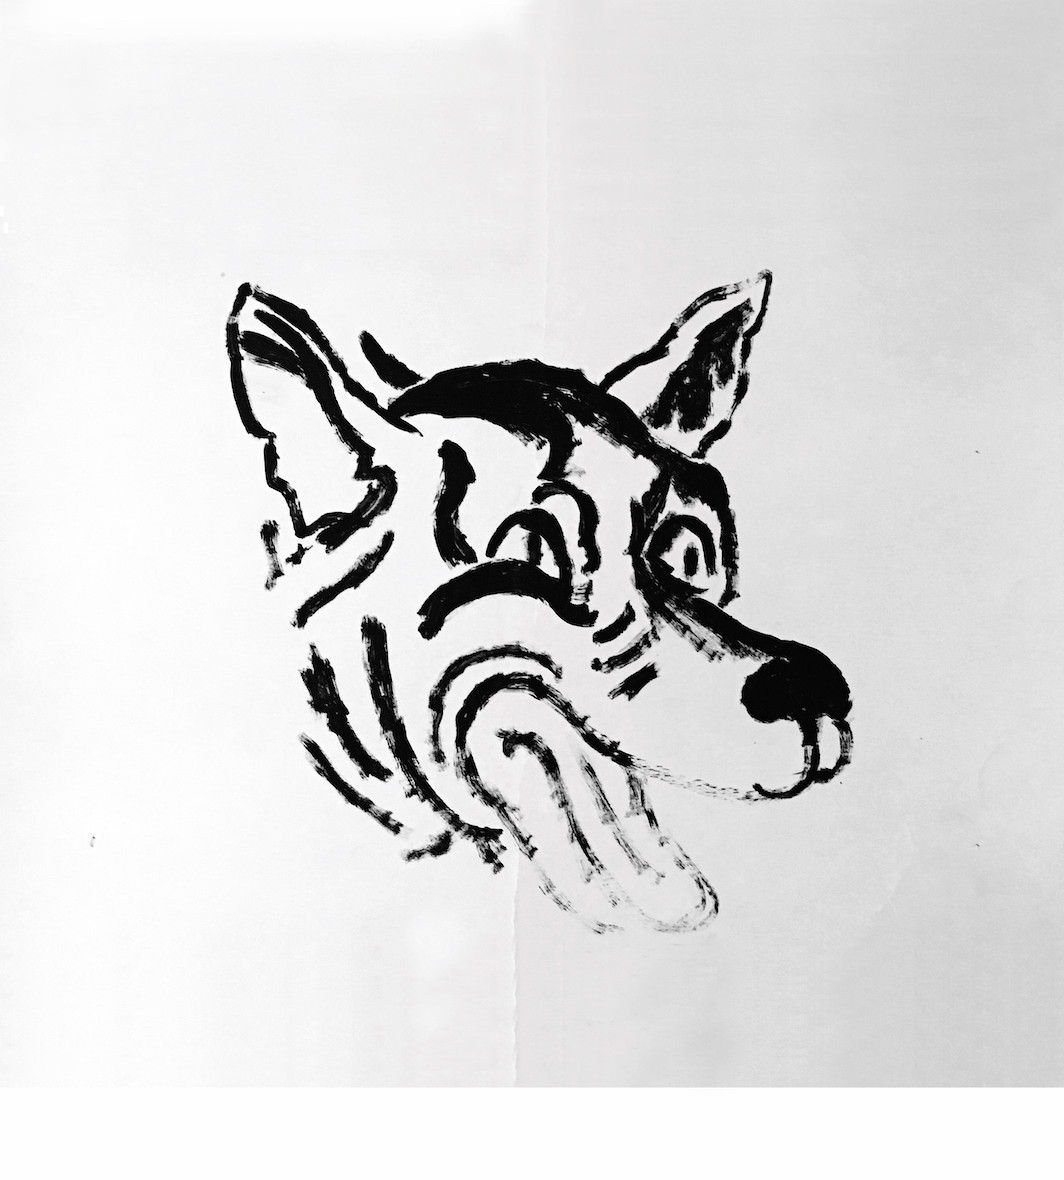 David Wojnarowicz, Untitled (Wolf), 1983, ink on paper, sheet size 22 x 28". Courtesy Hal Bromm Gallery